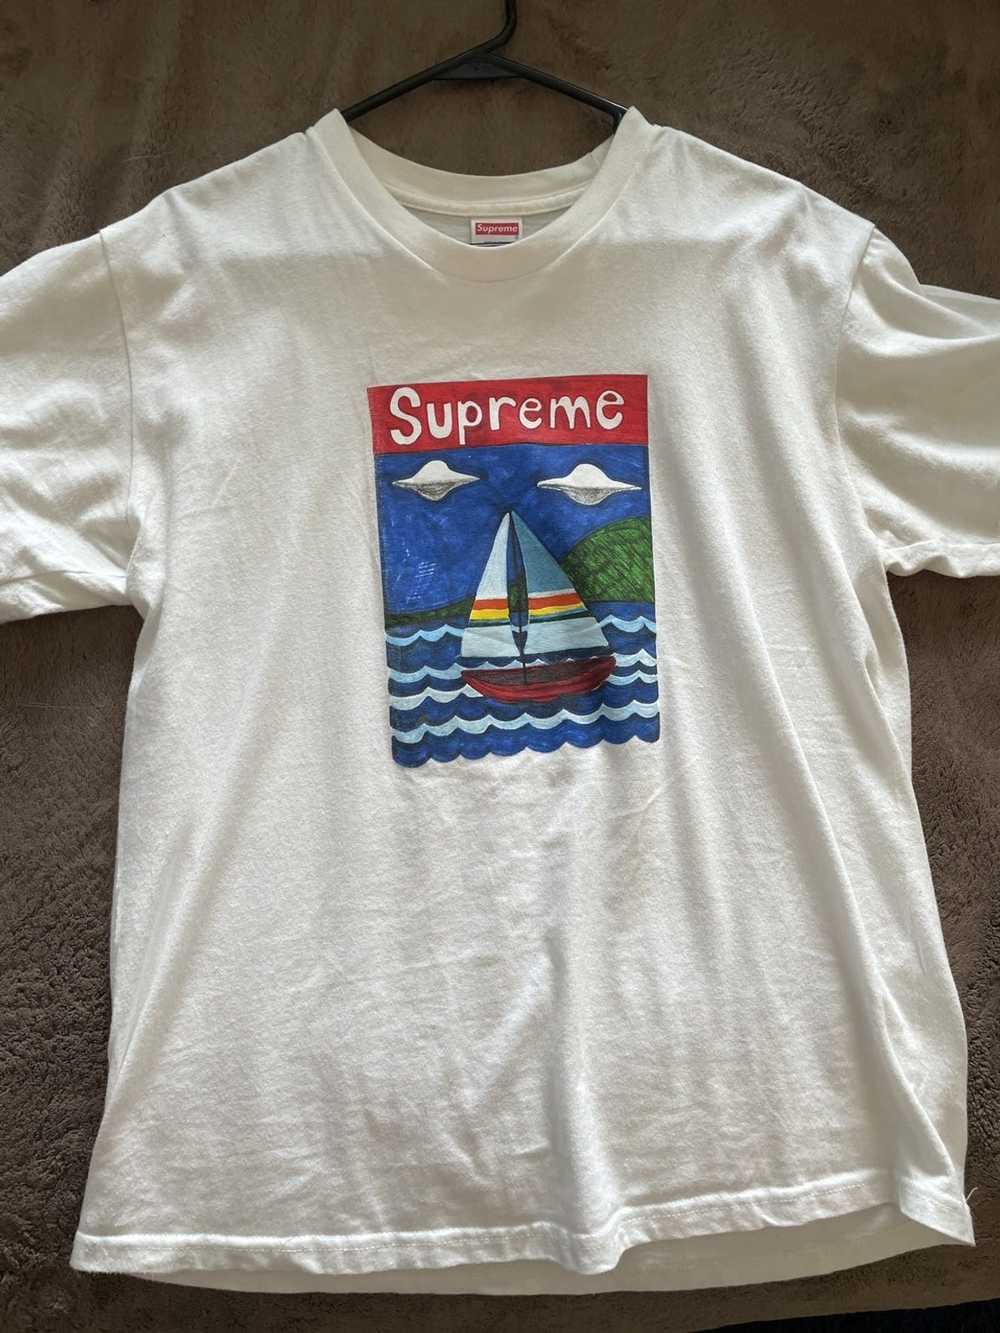 Supreme Supreme sailboat tee/ worn 2x almost brand new - Gem